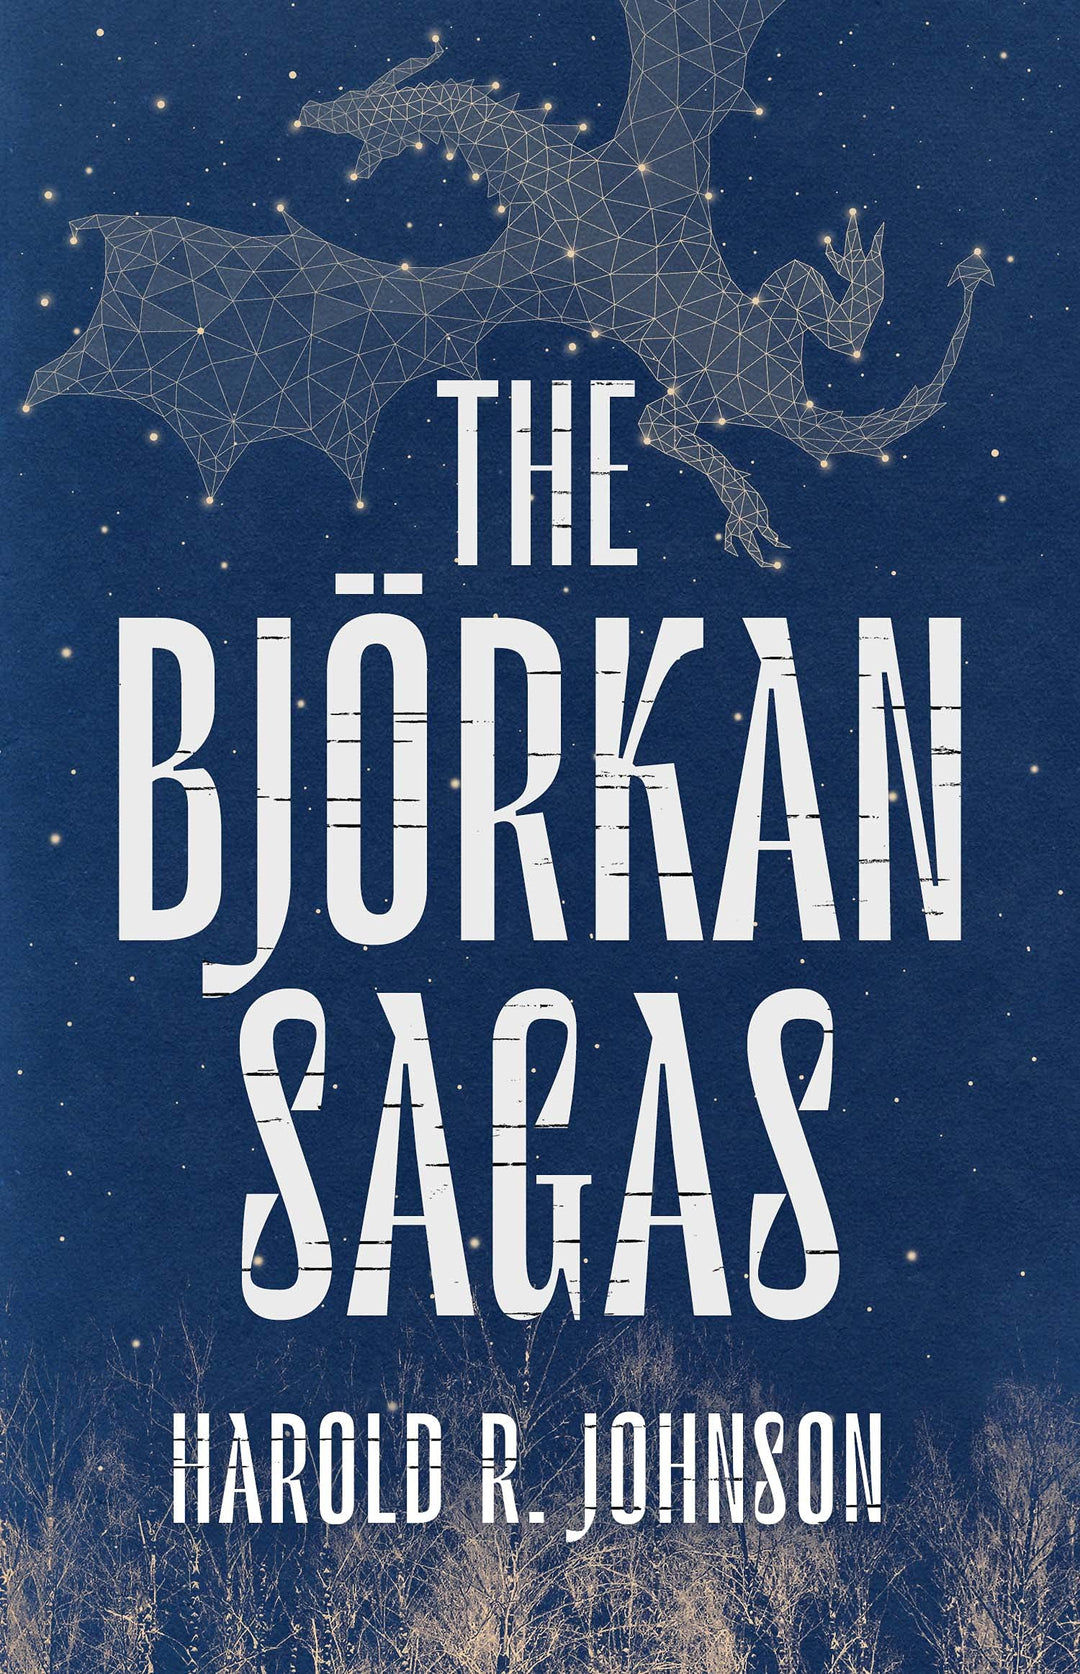 The Björkan Sagas by Harold R. Johnson